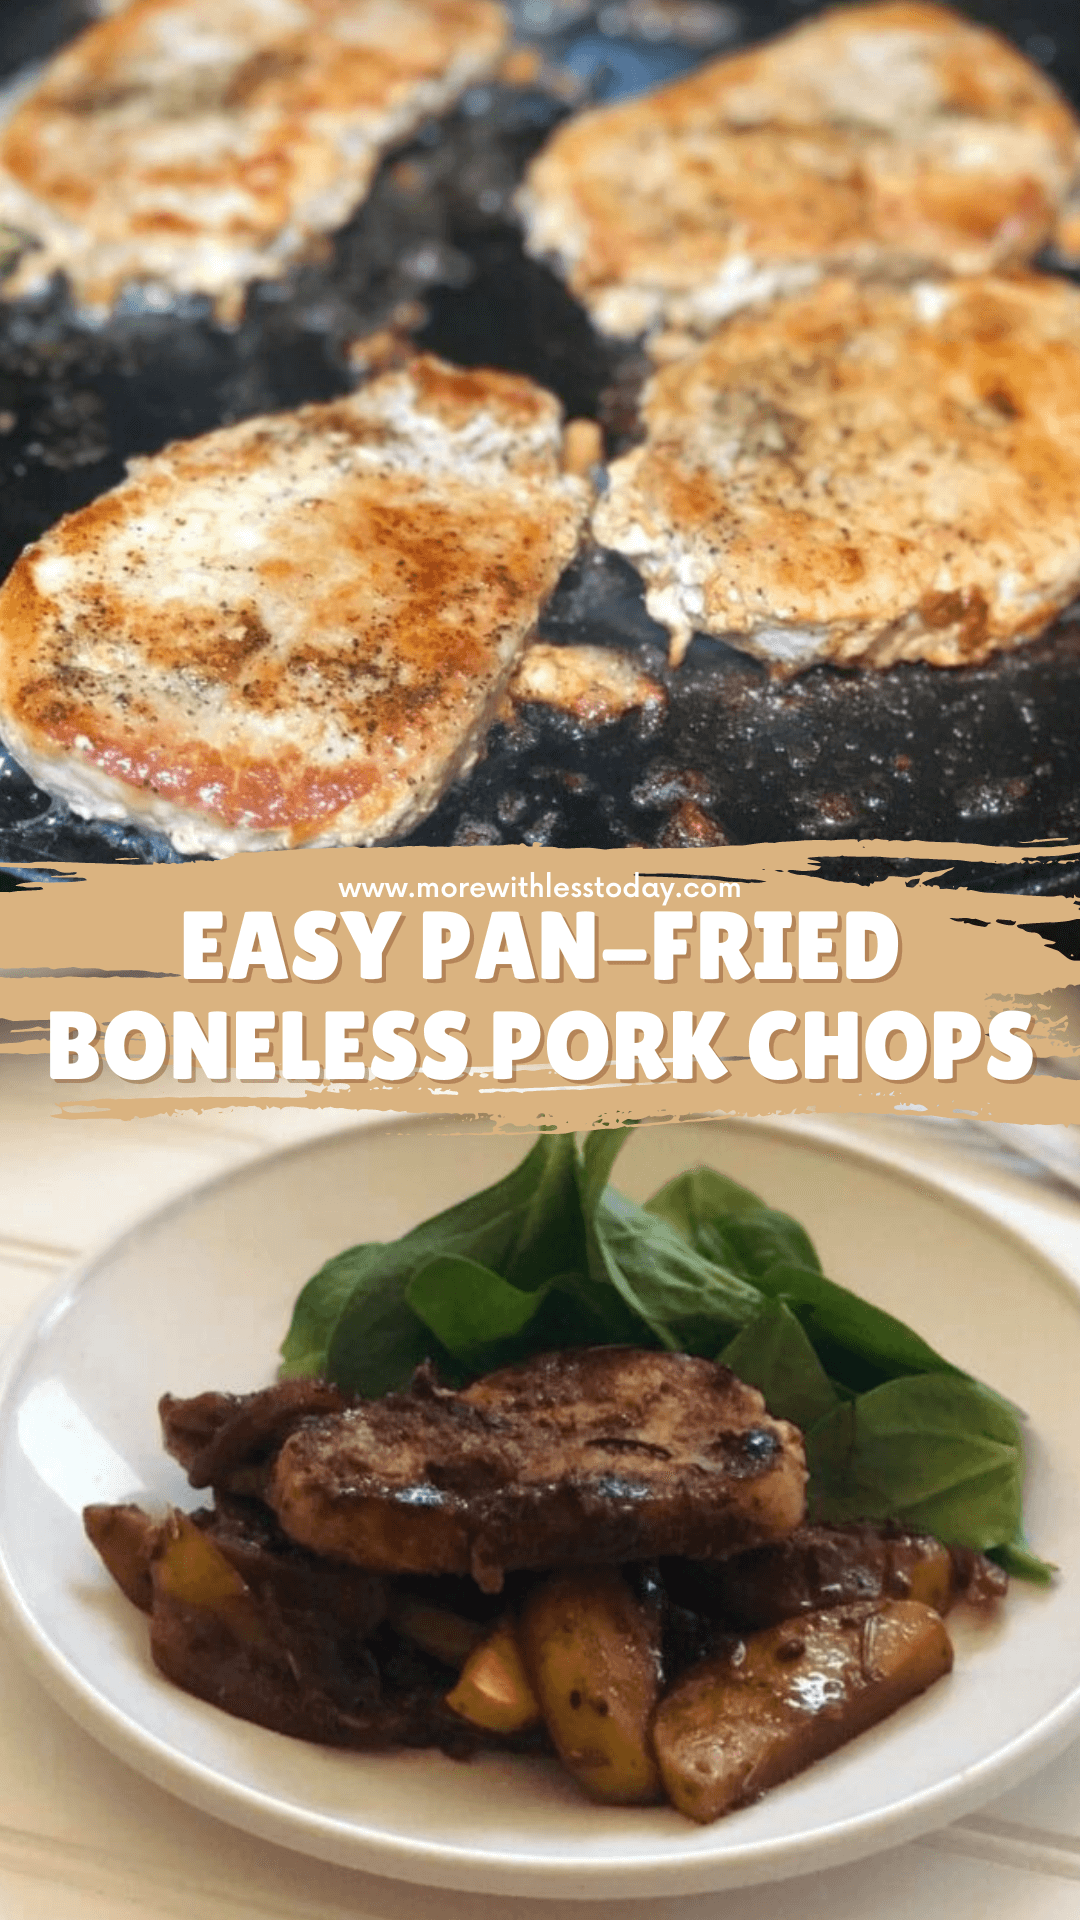 PIN for Pan-Fried Boneless Pork Chops